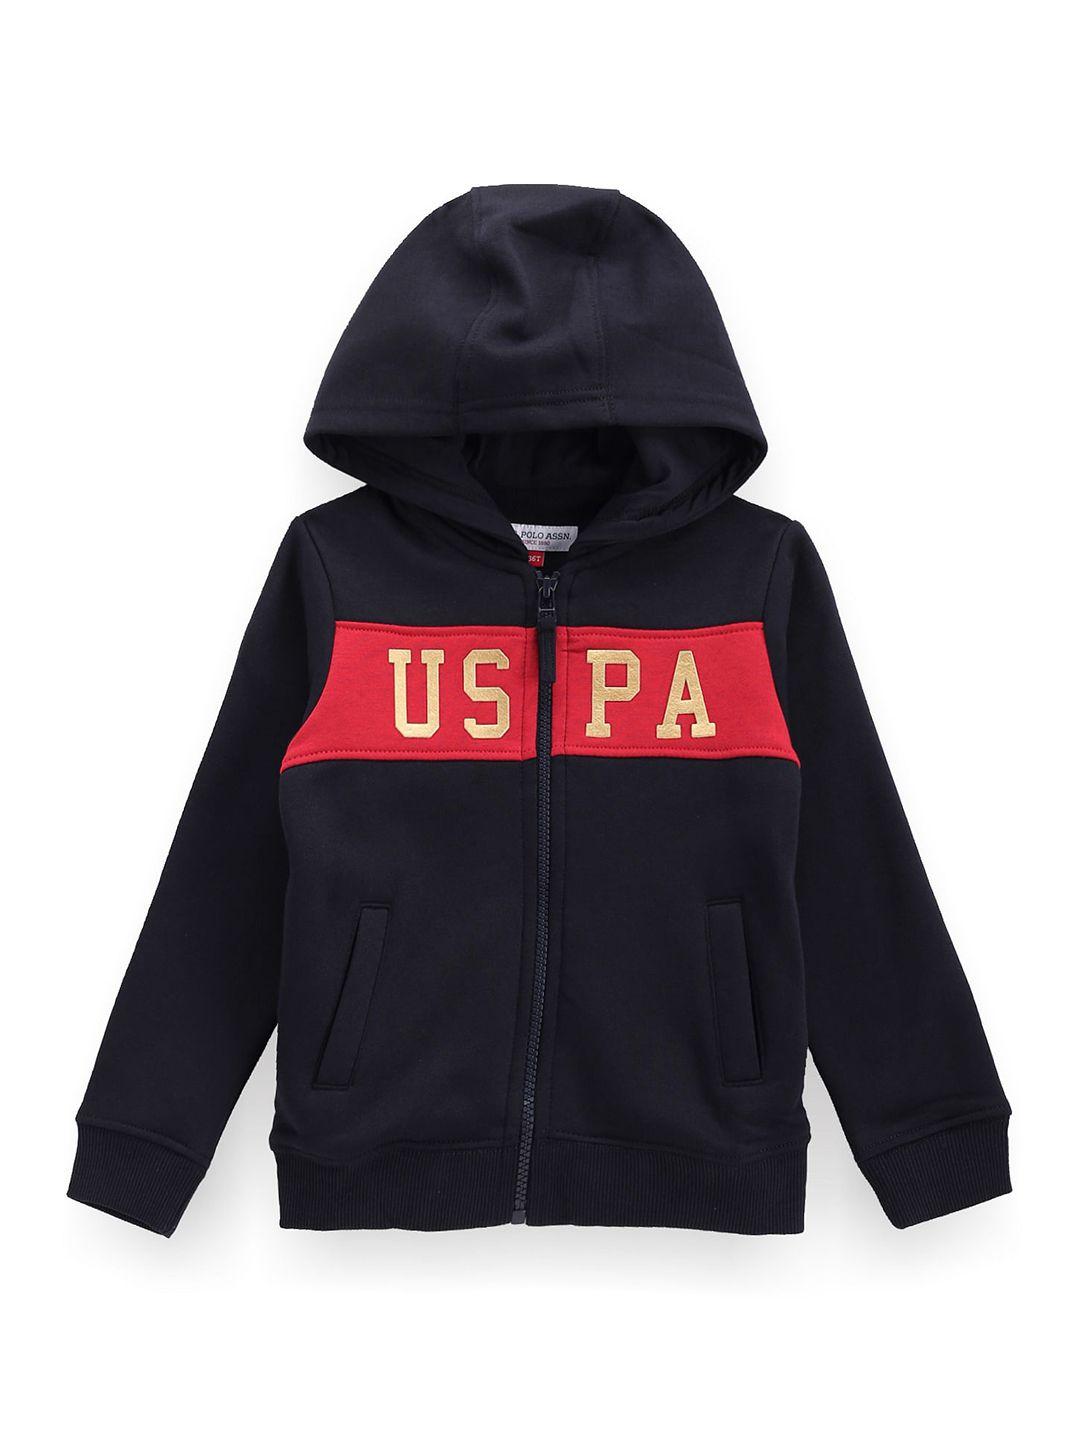 u.s. polo assn. kids boys brand logo printed hooded front open cotton sweatshirt